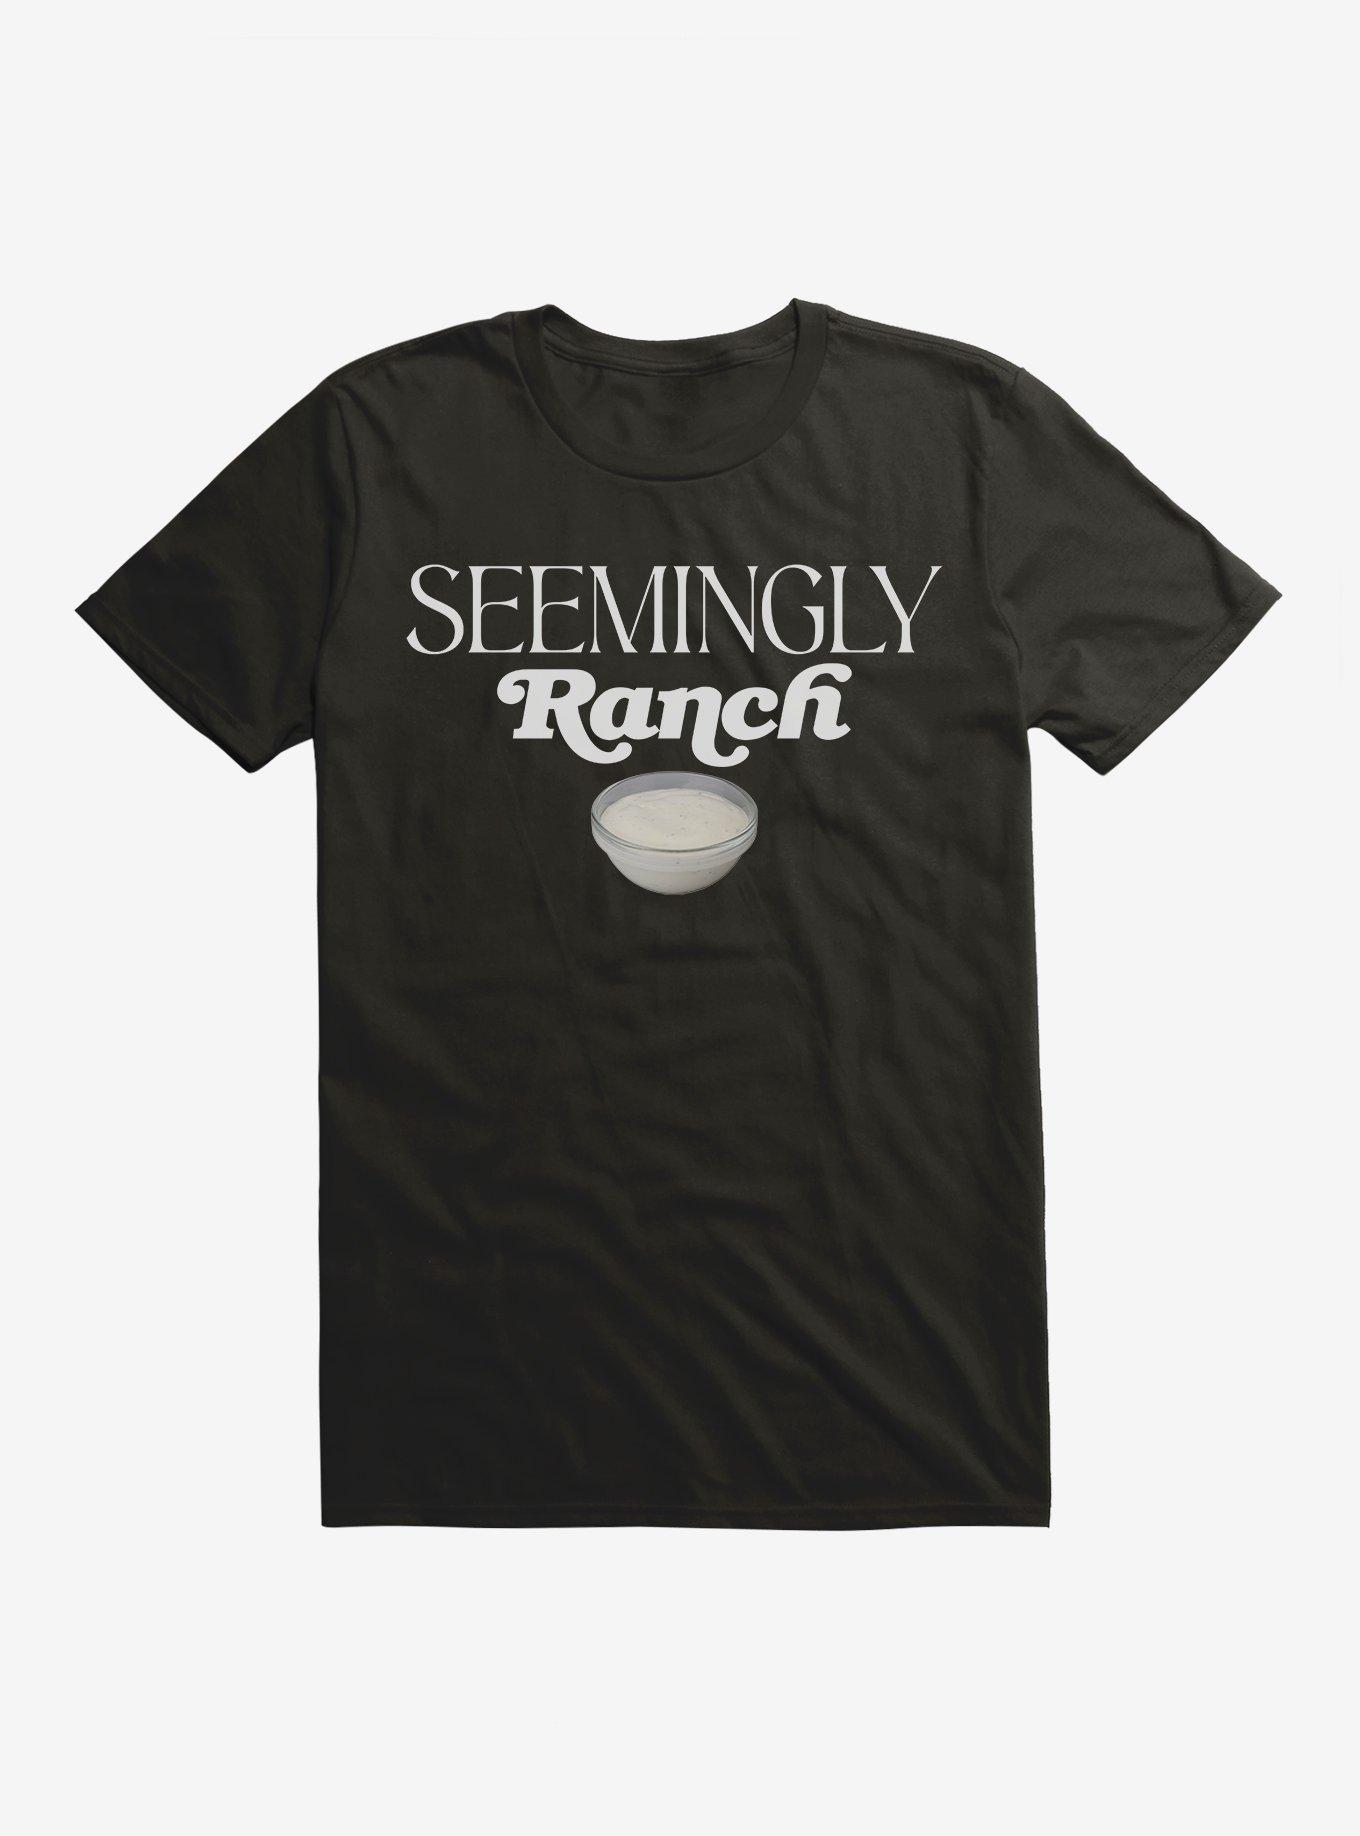 Hot Topic Seemingly Ranch Proper T-Shirt